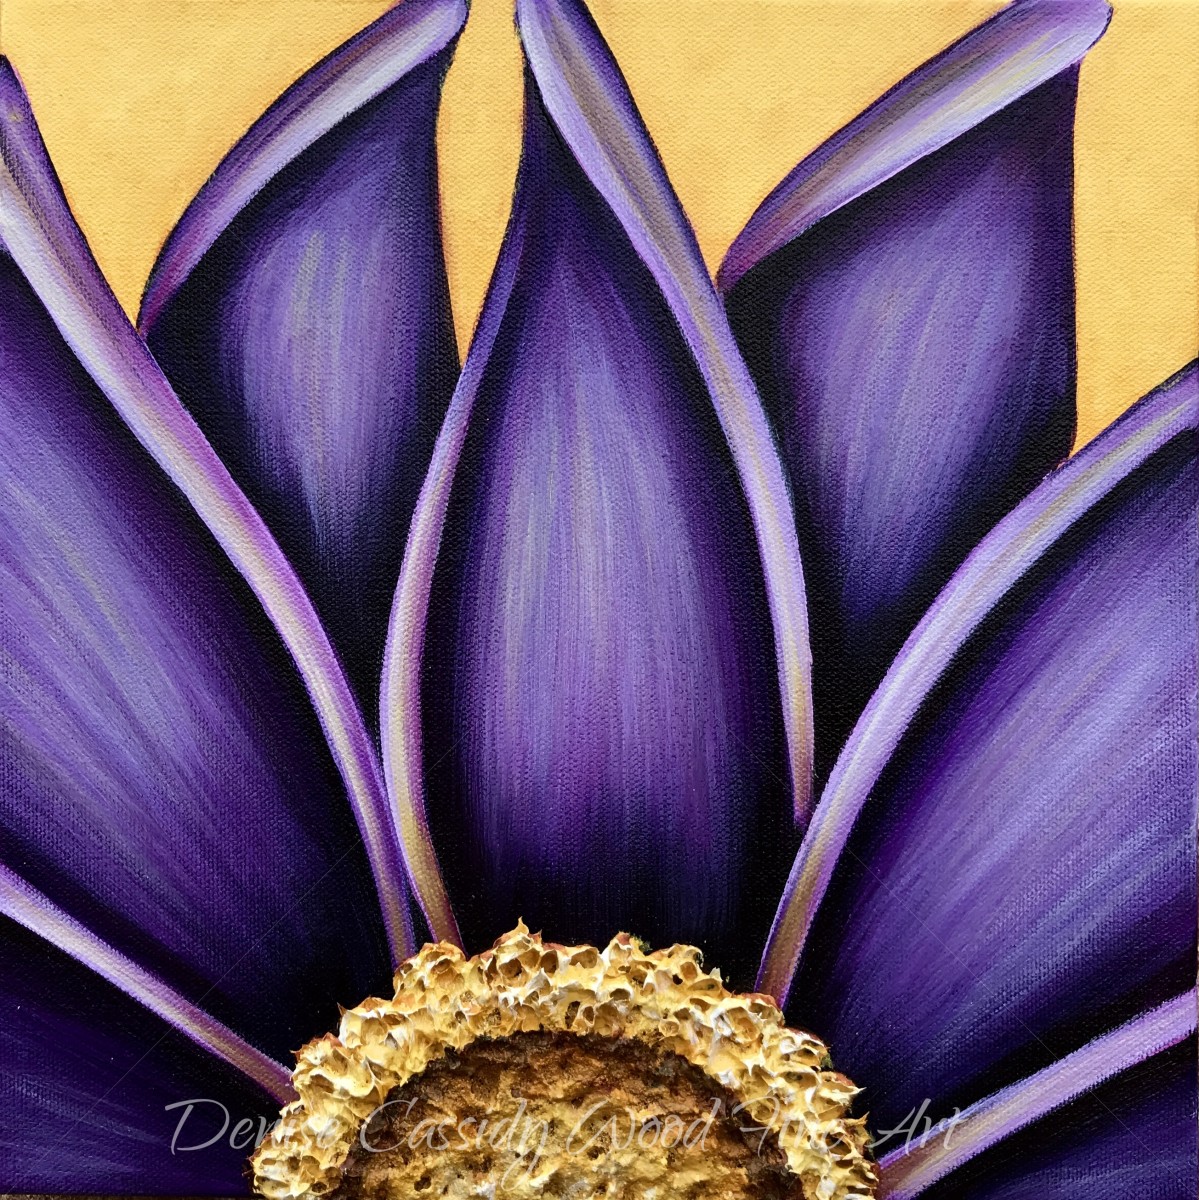 Purple Daisy VI by Denise Cassidy Wood 